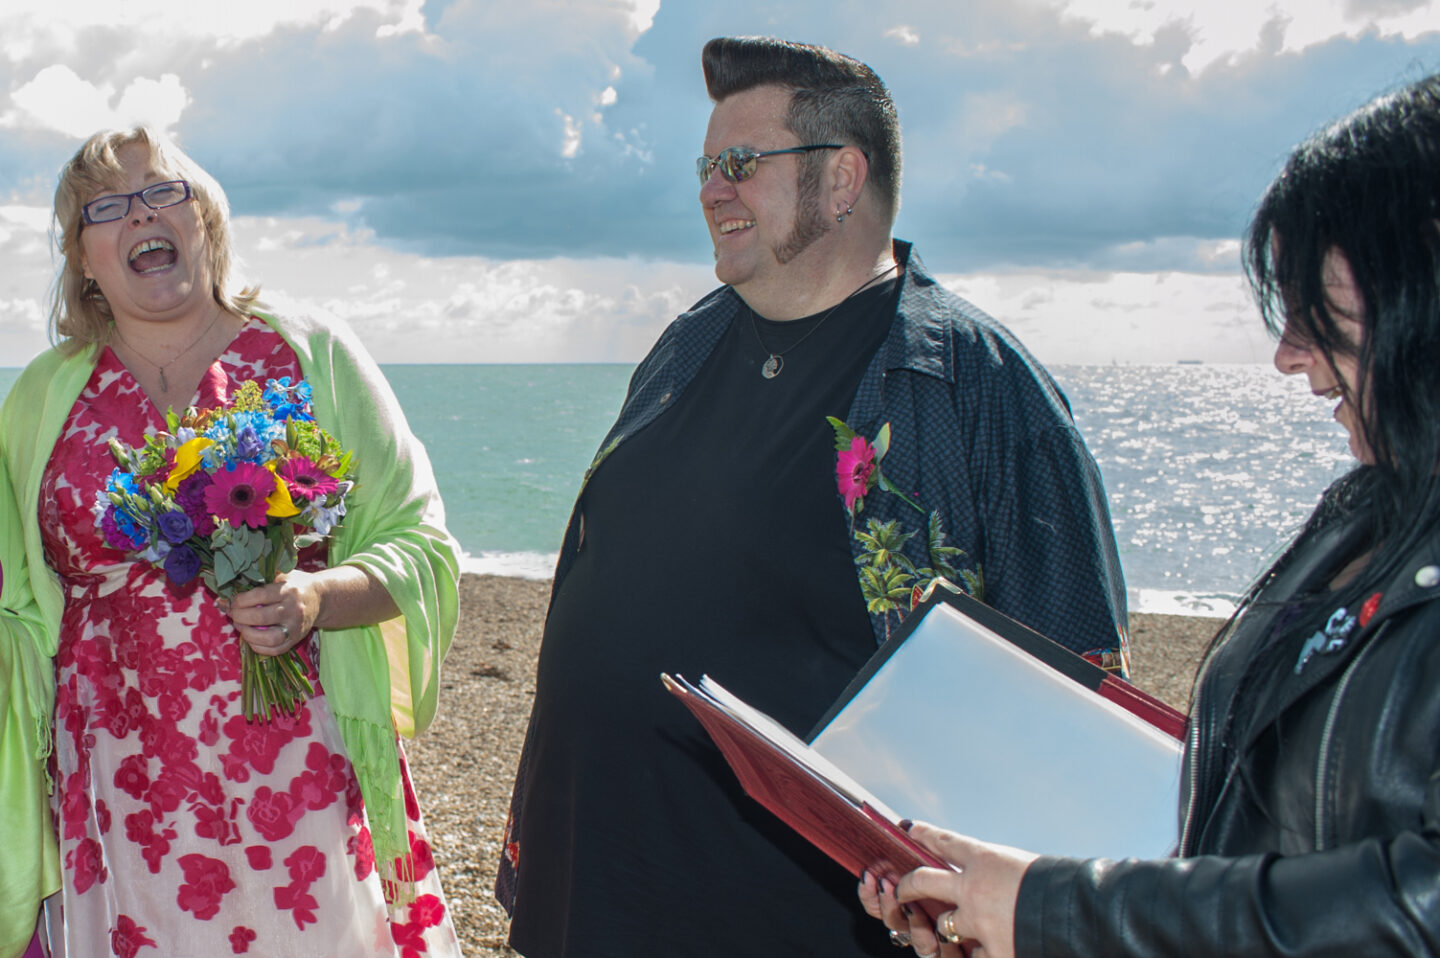 Personalised wedding ceremony from Alternative Ceremonies UK